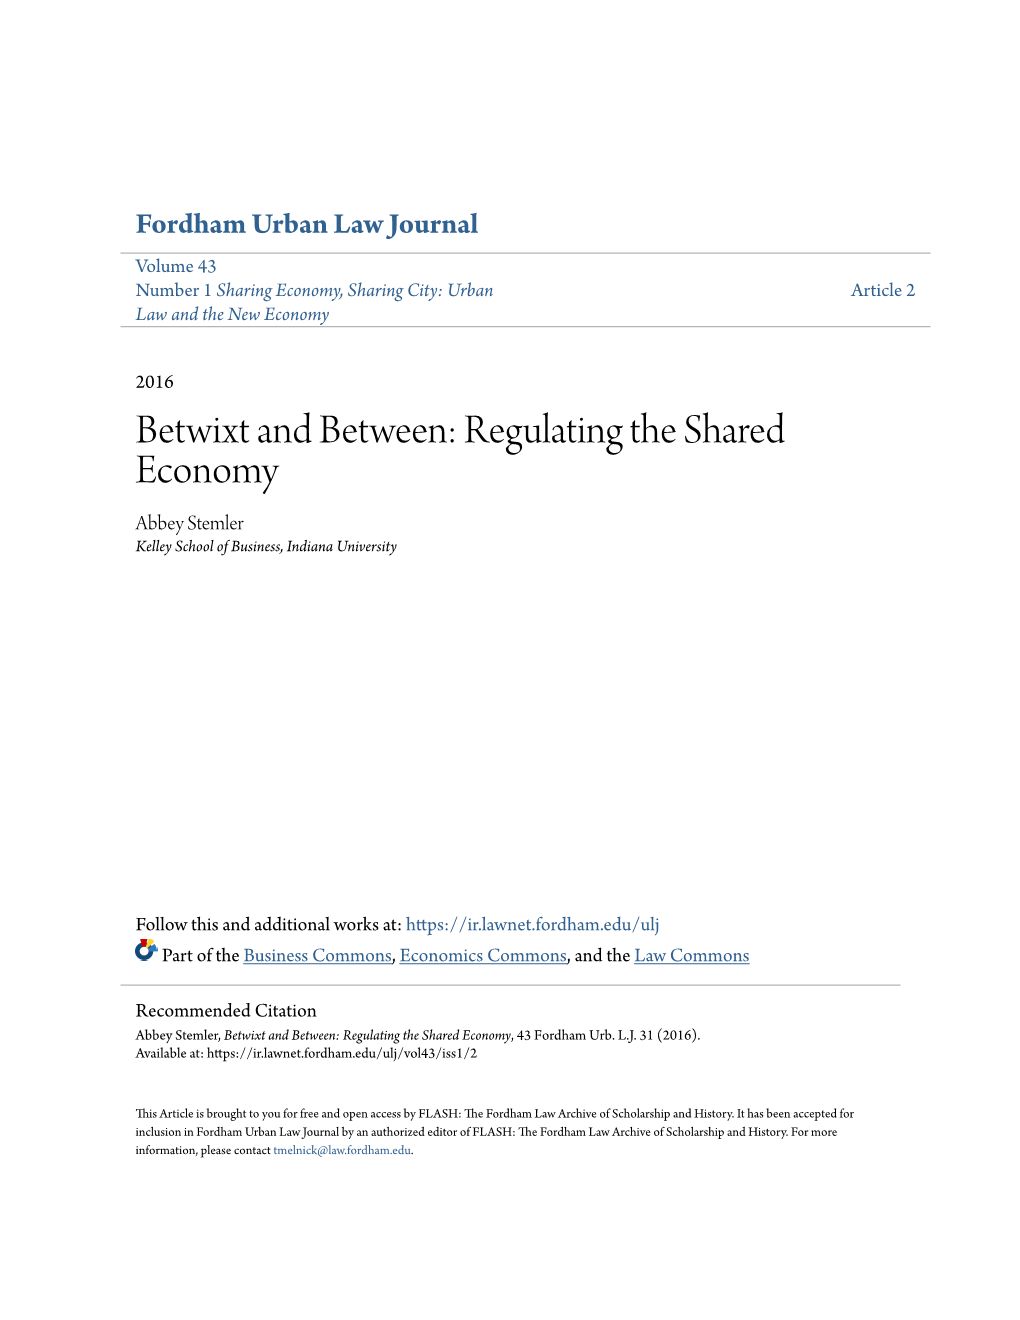 Regulating the Shared Economy Abbey Stemler Kelley School of Business, Indiana University